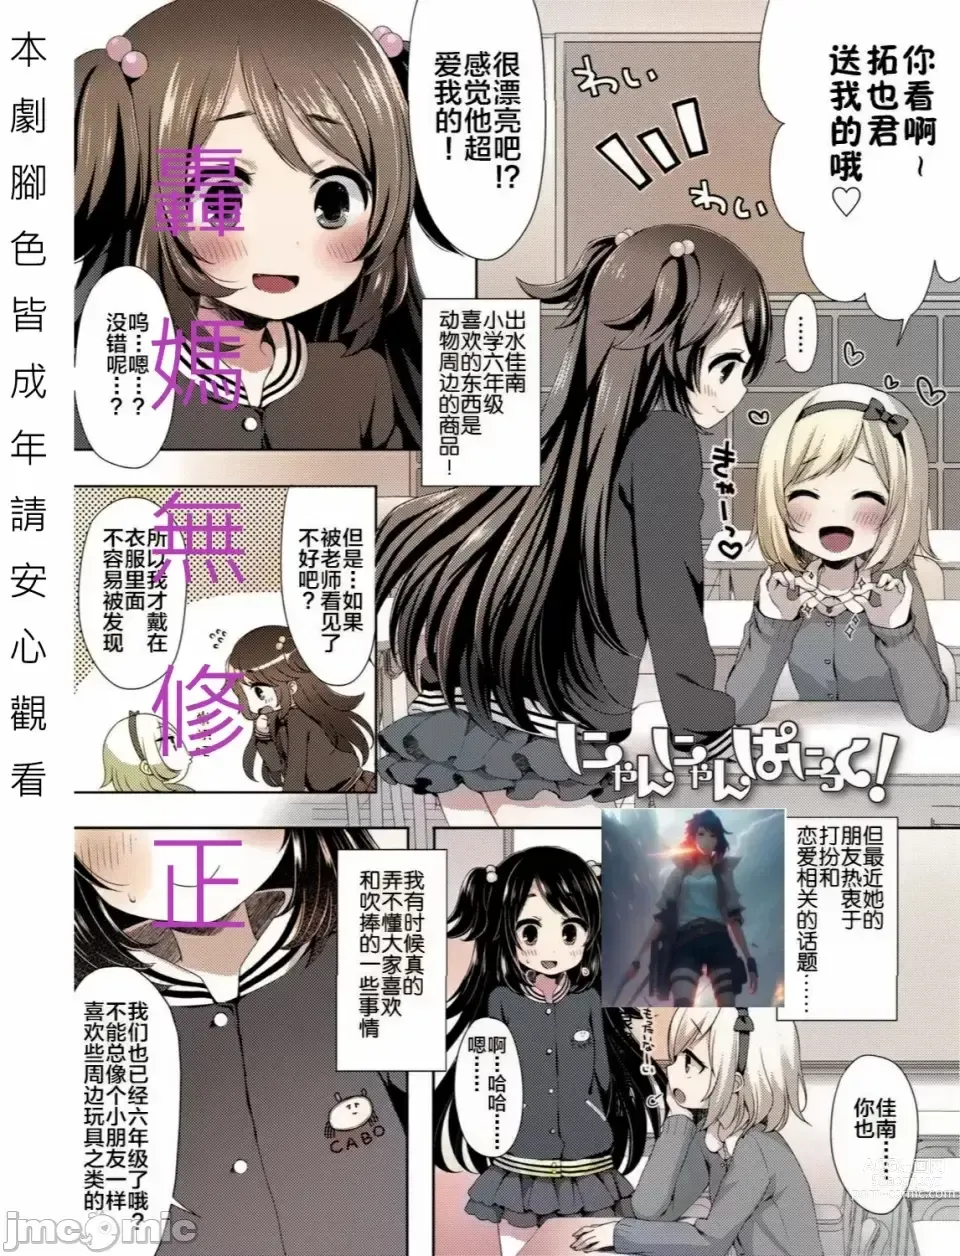 Page 1 of manga 喵喵驚喜!